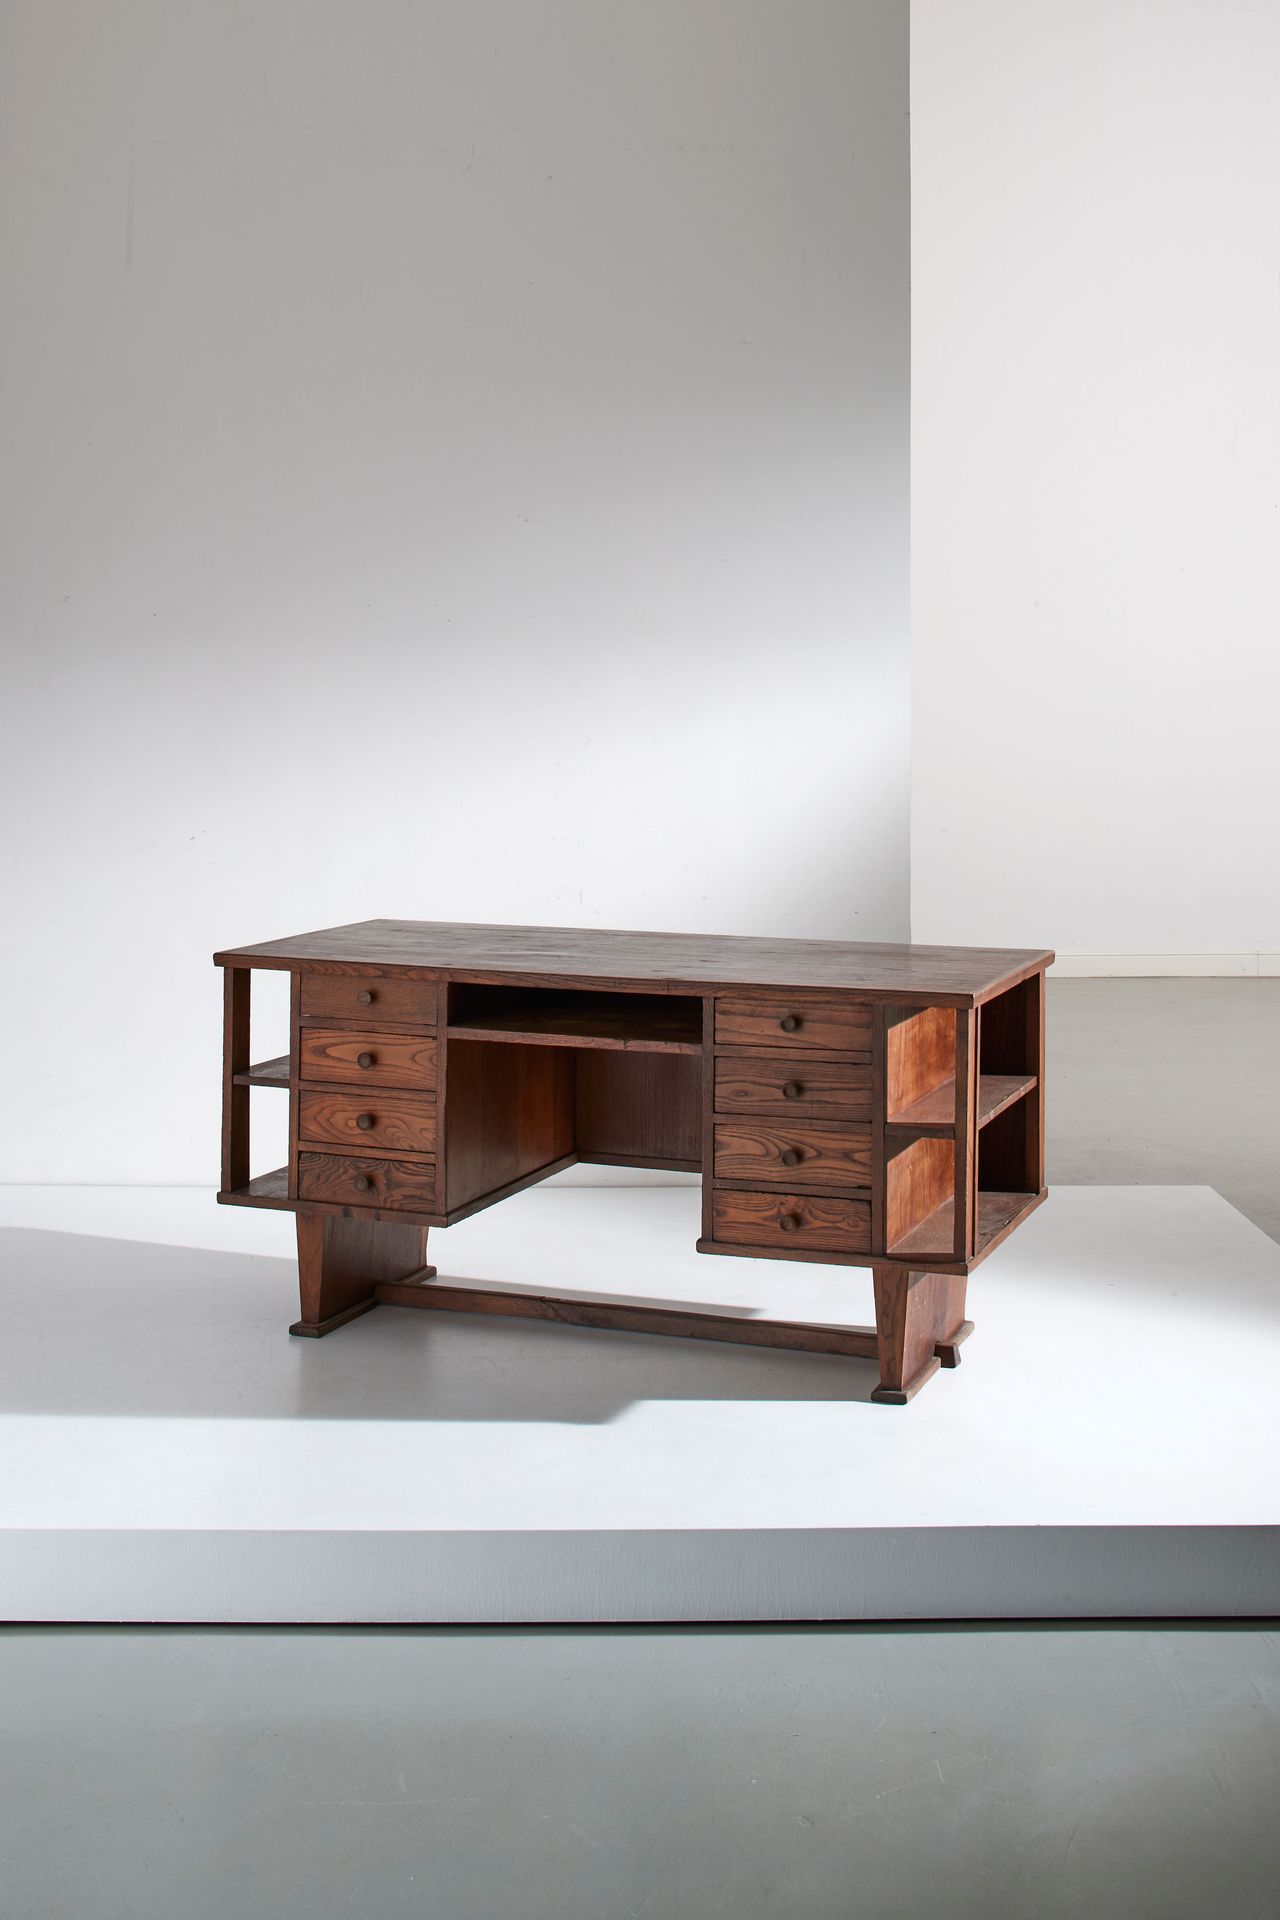 Manifattura Italiana Desk. Oak wood. Italy 1950s.
Cm 78x160x74
AN ITALIAN DESK

&hellip;